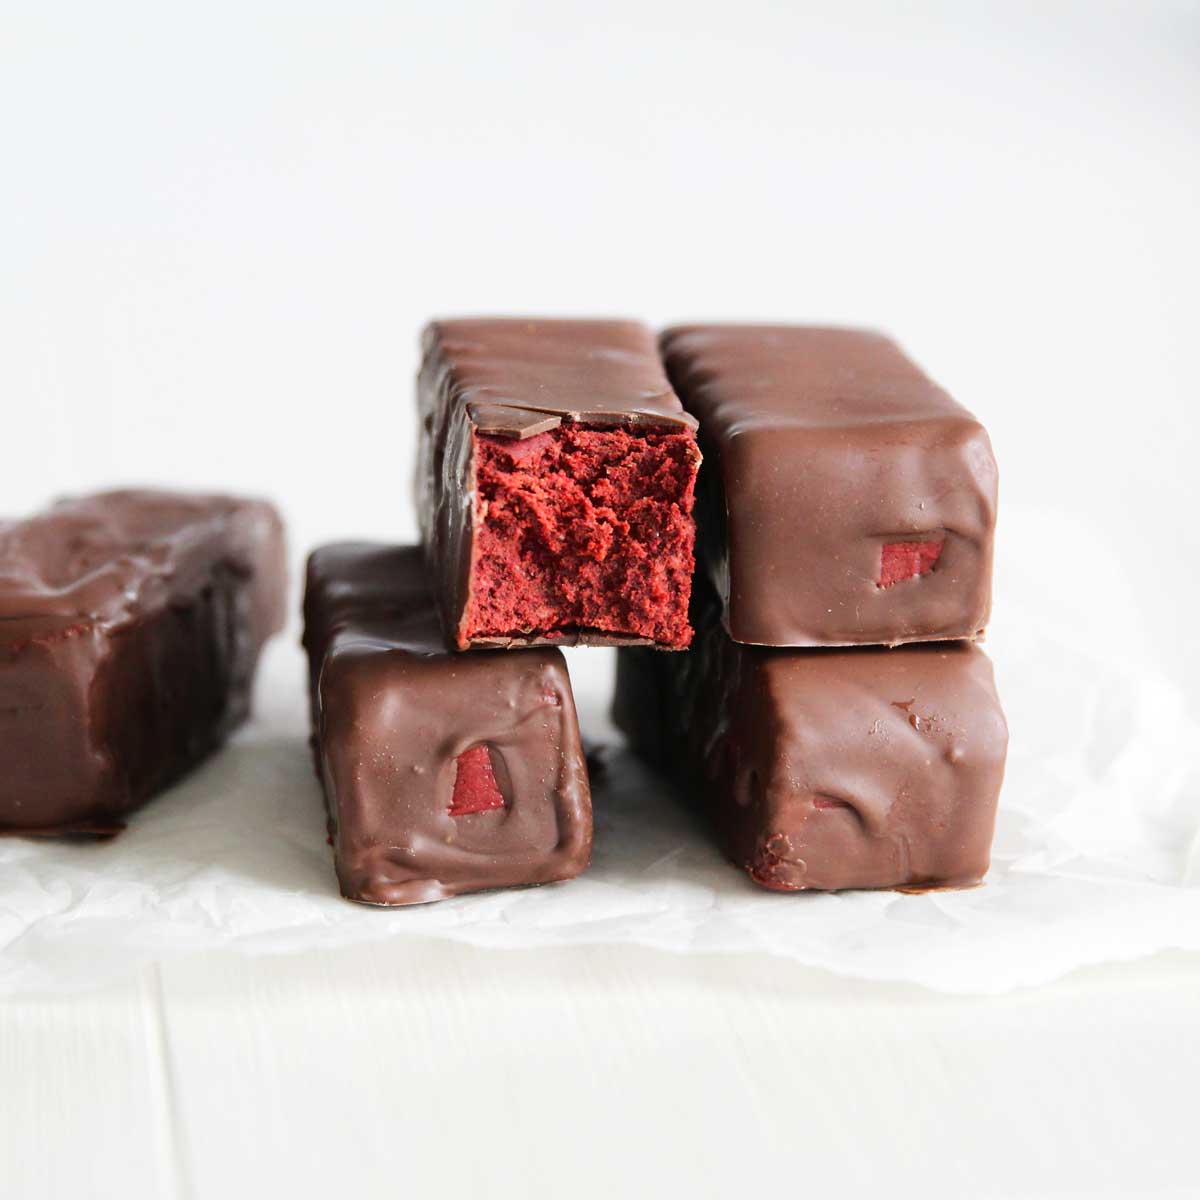 Gluten Free Red Velvet Cake Protein Bars (The Best Guilt-Free Dessert) - Peanut Clusters with Collagen